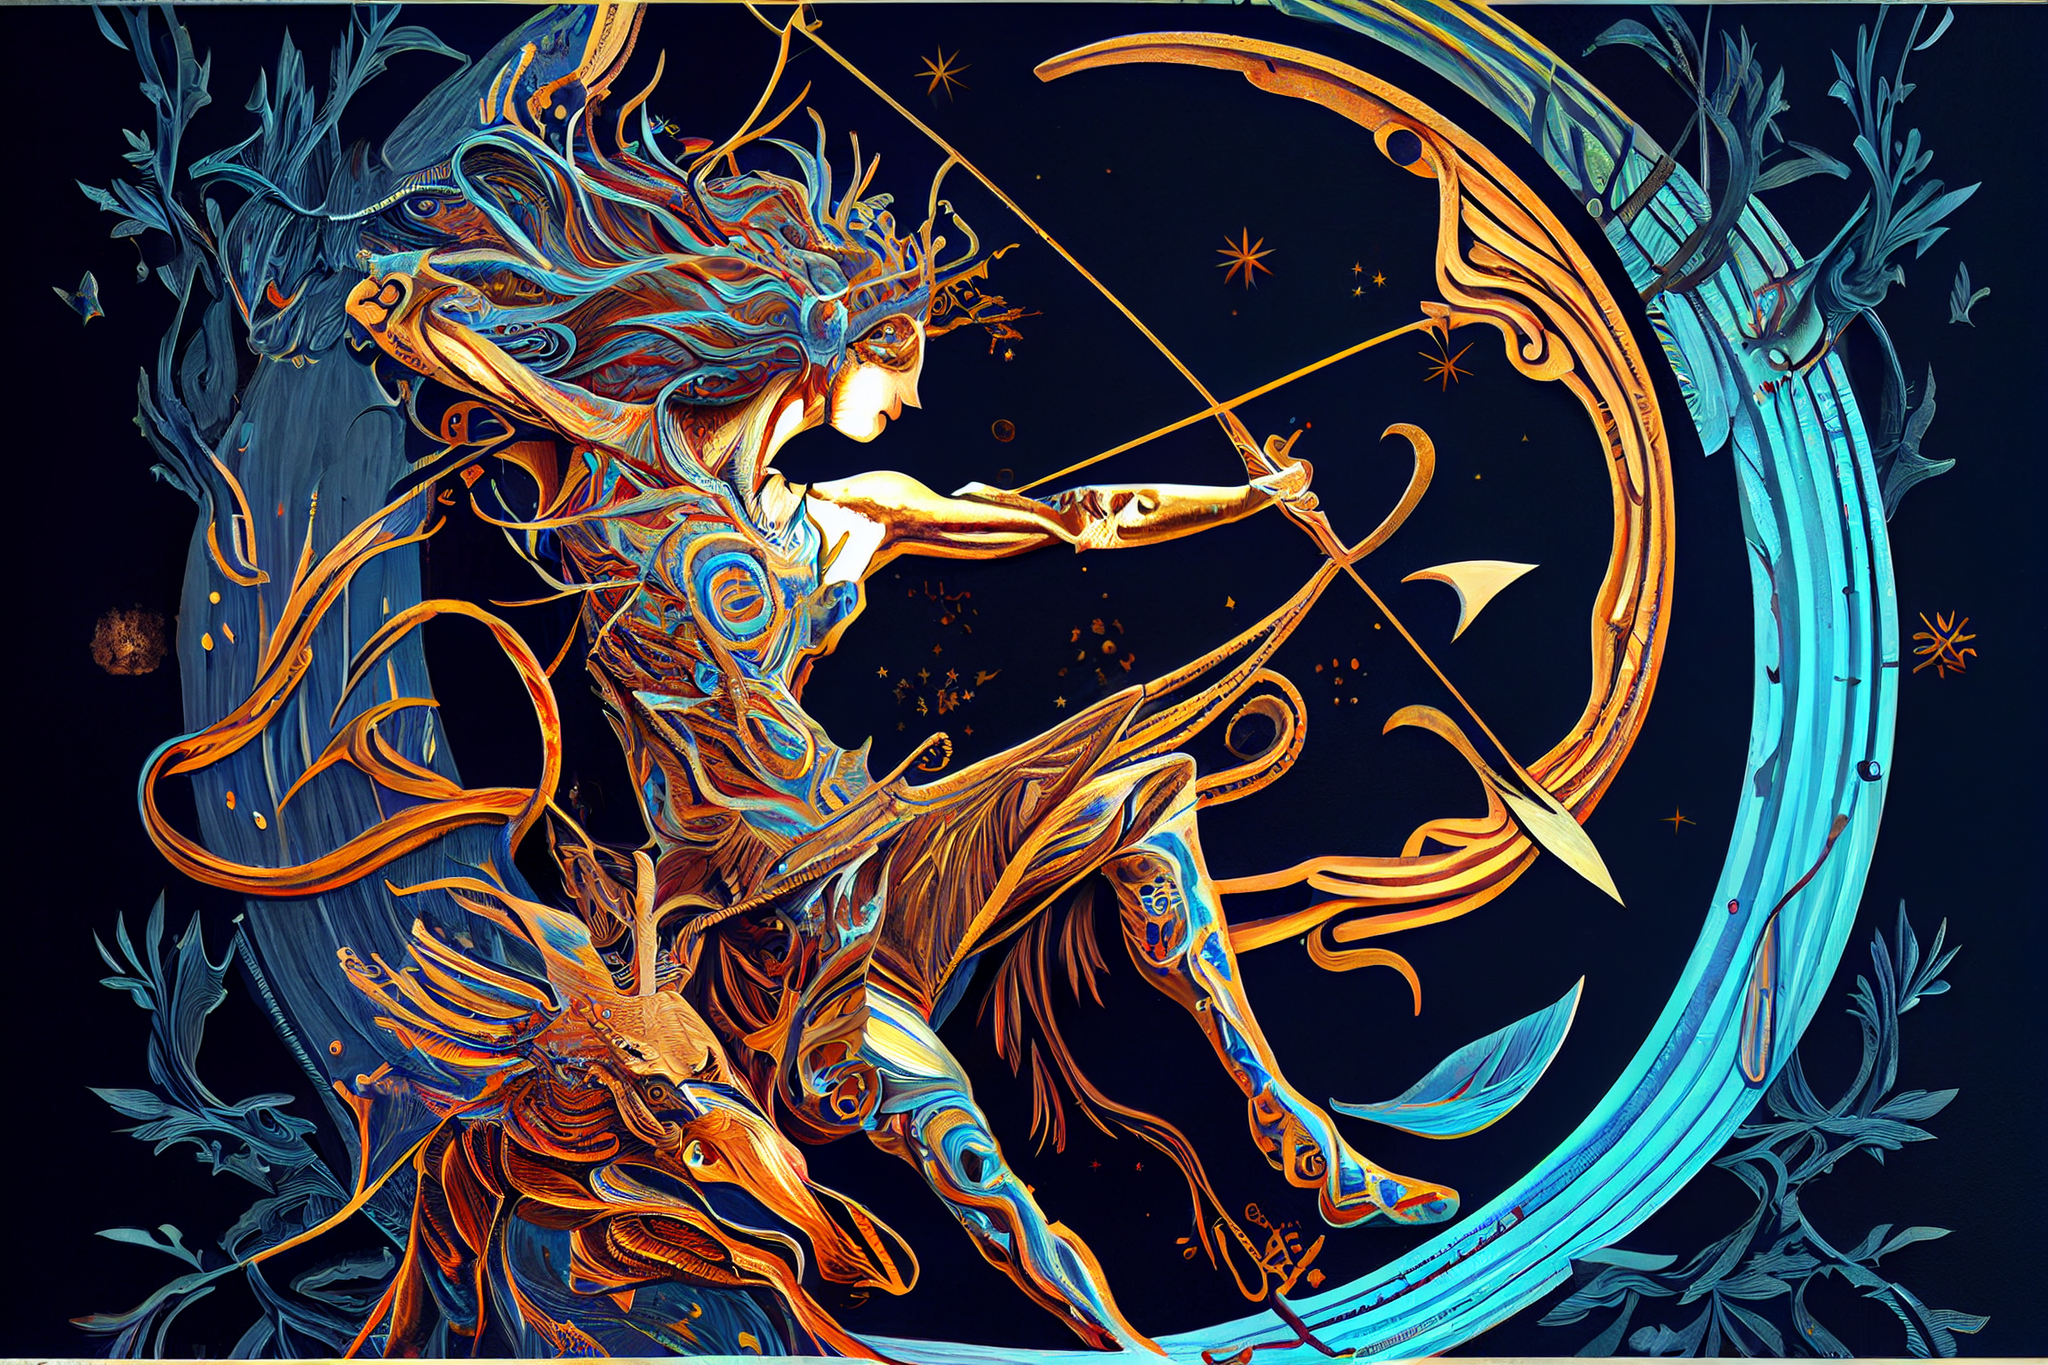 Starry Archer: A Beautiful Wall Art Depicting the Sagittarius Zodiac Sign